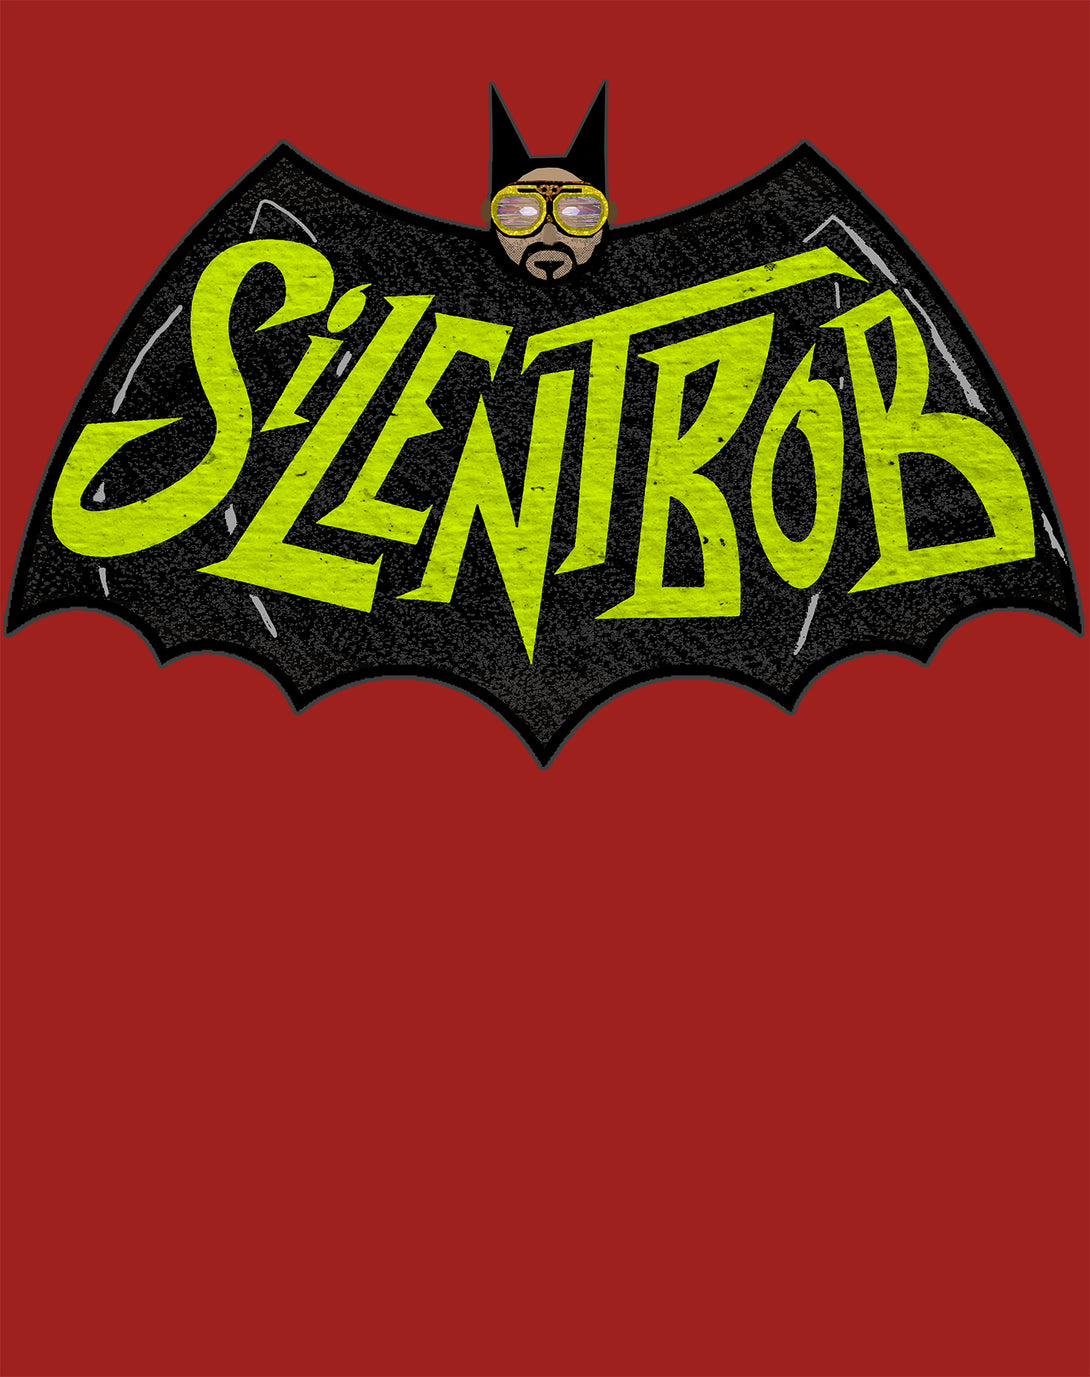 Kevin Smith View Askewniverse Logo Silent Bat Bob Official Sweatshirt Red - Urban Species Design Close Up